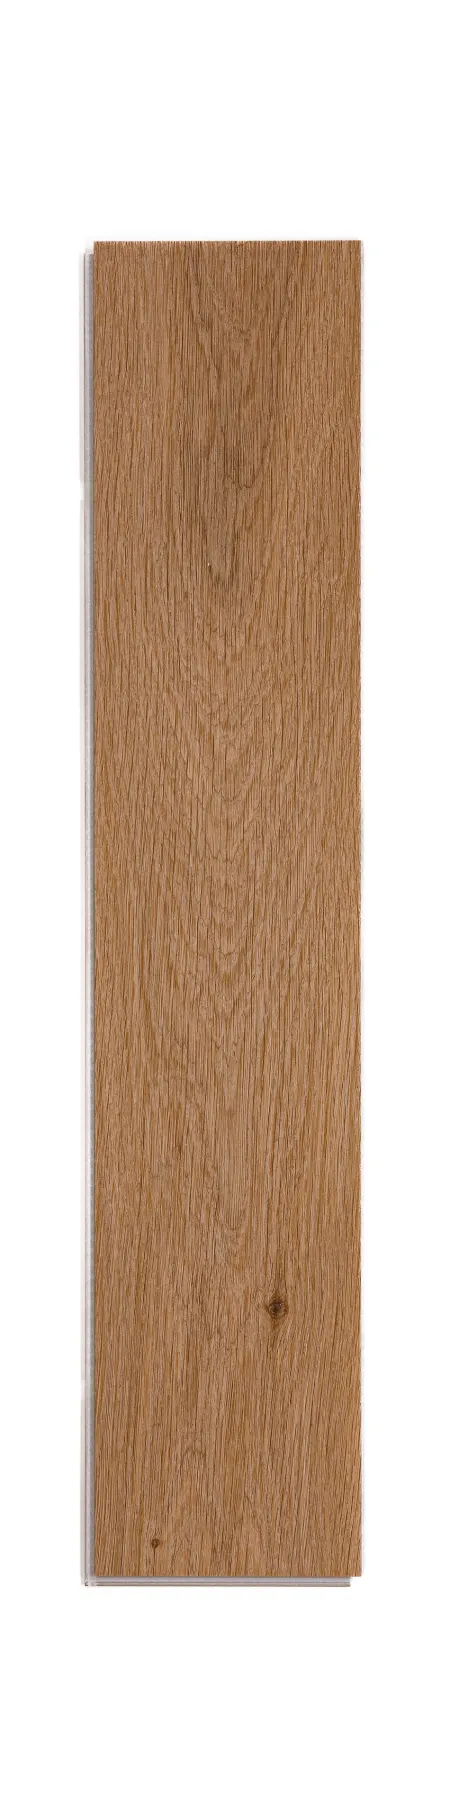 Herringbone vinyl SPC RIGID podlaha 5/0,3 mm s podložkou JÄGERNDORF 625x125 mm (0,937 m2)